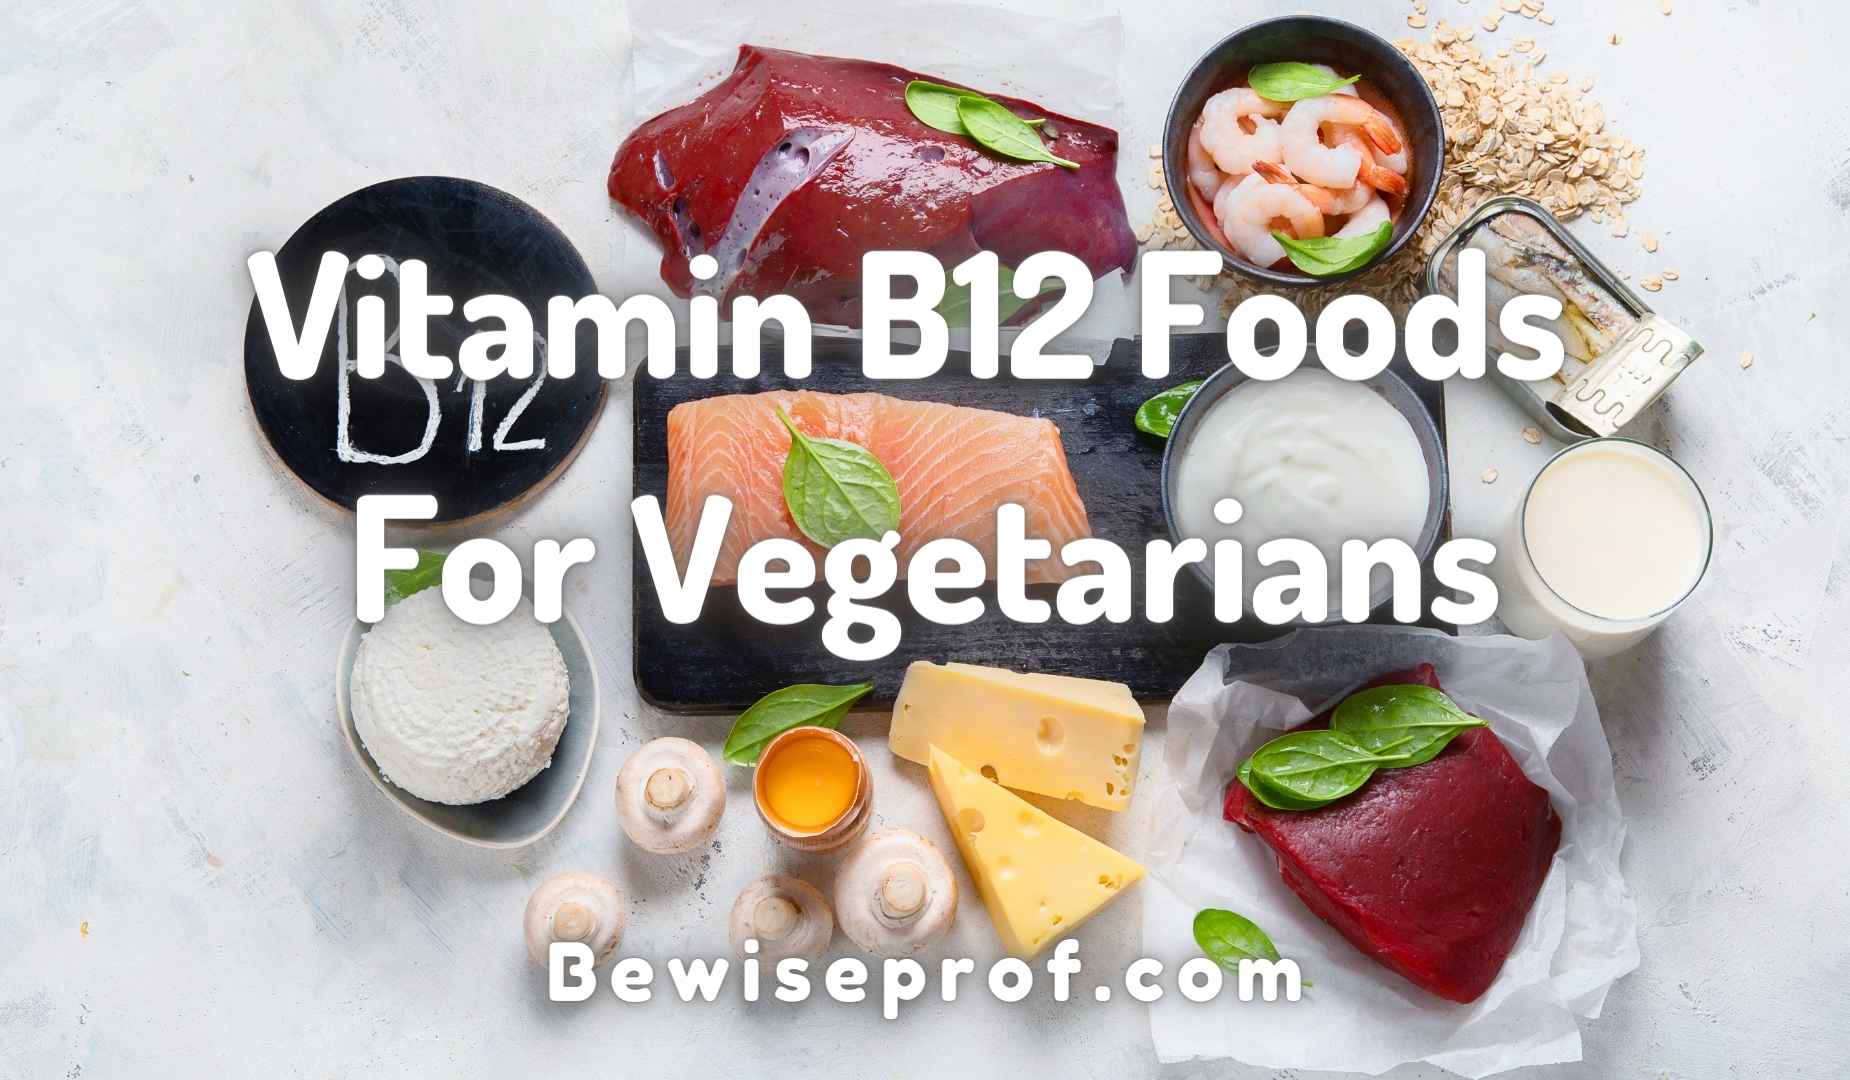 Vitamin B12 Foods for Vegetarians